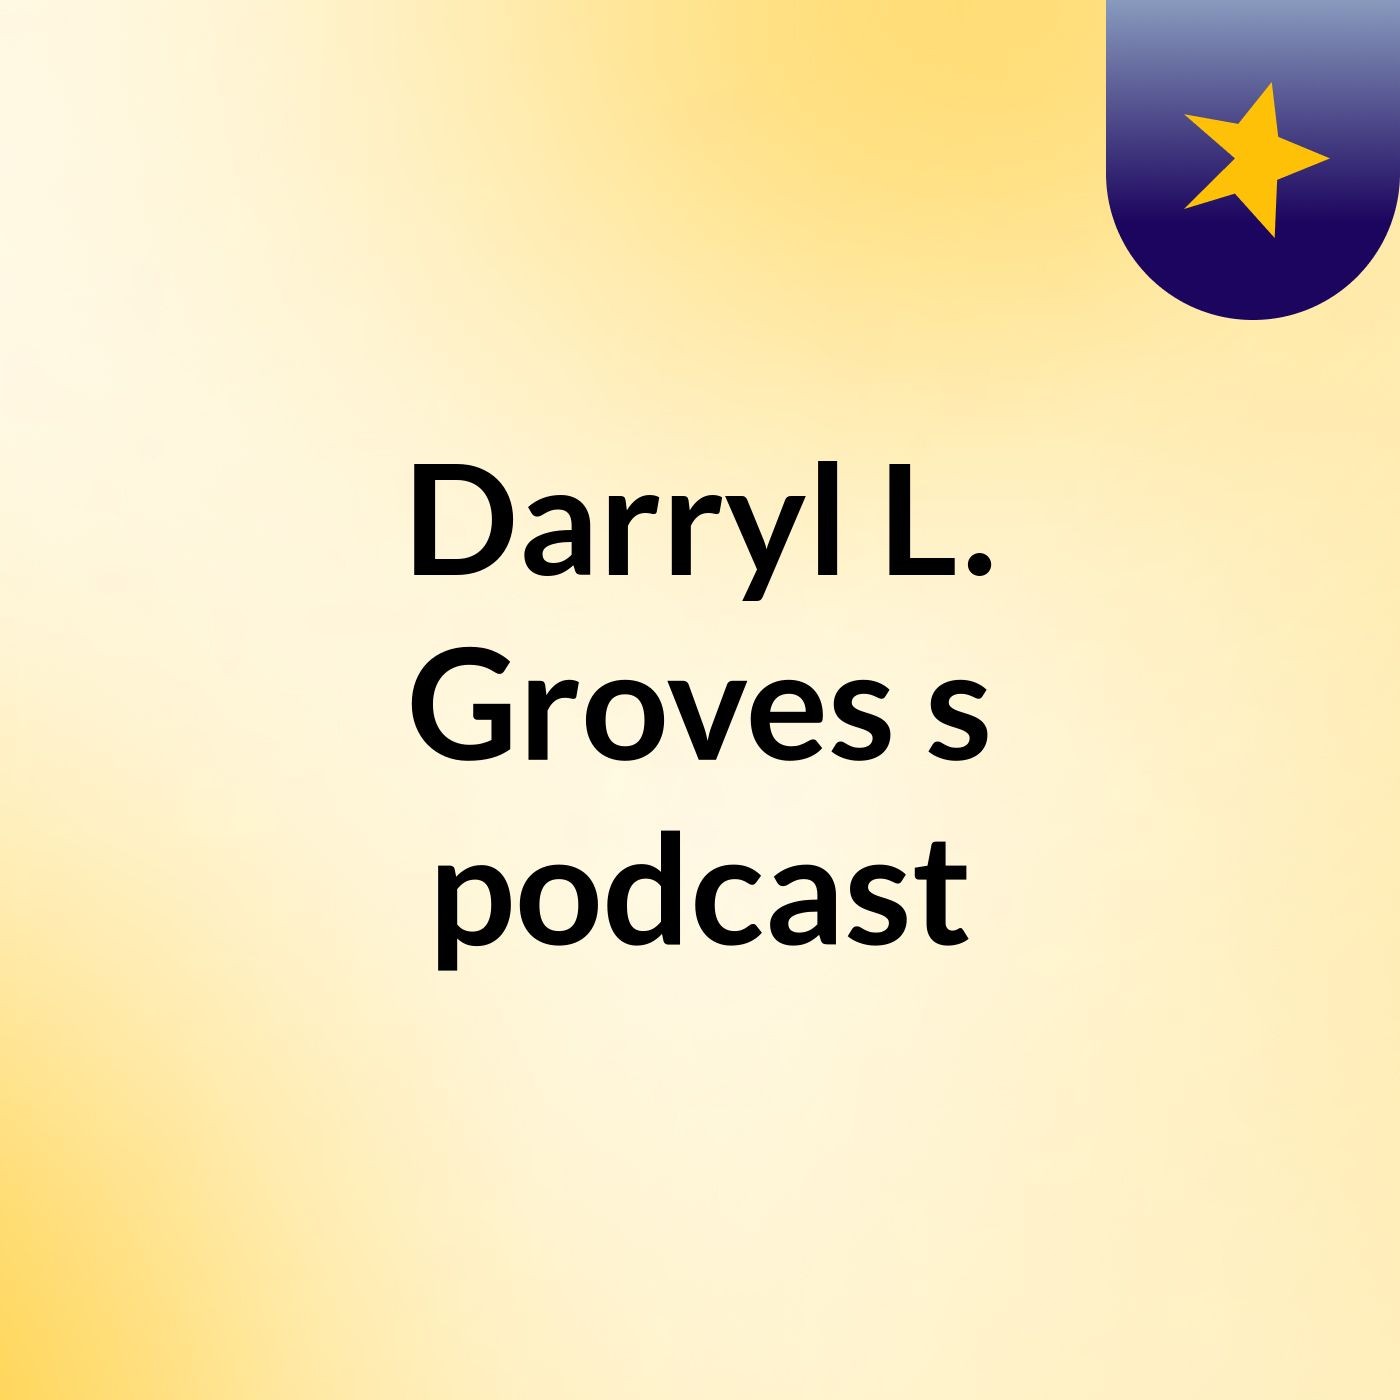 Episode 5 - Darryl L. Groves's podcast